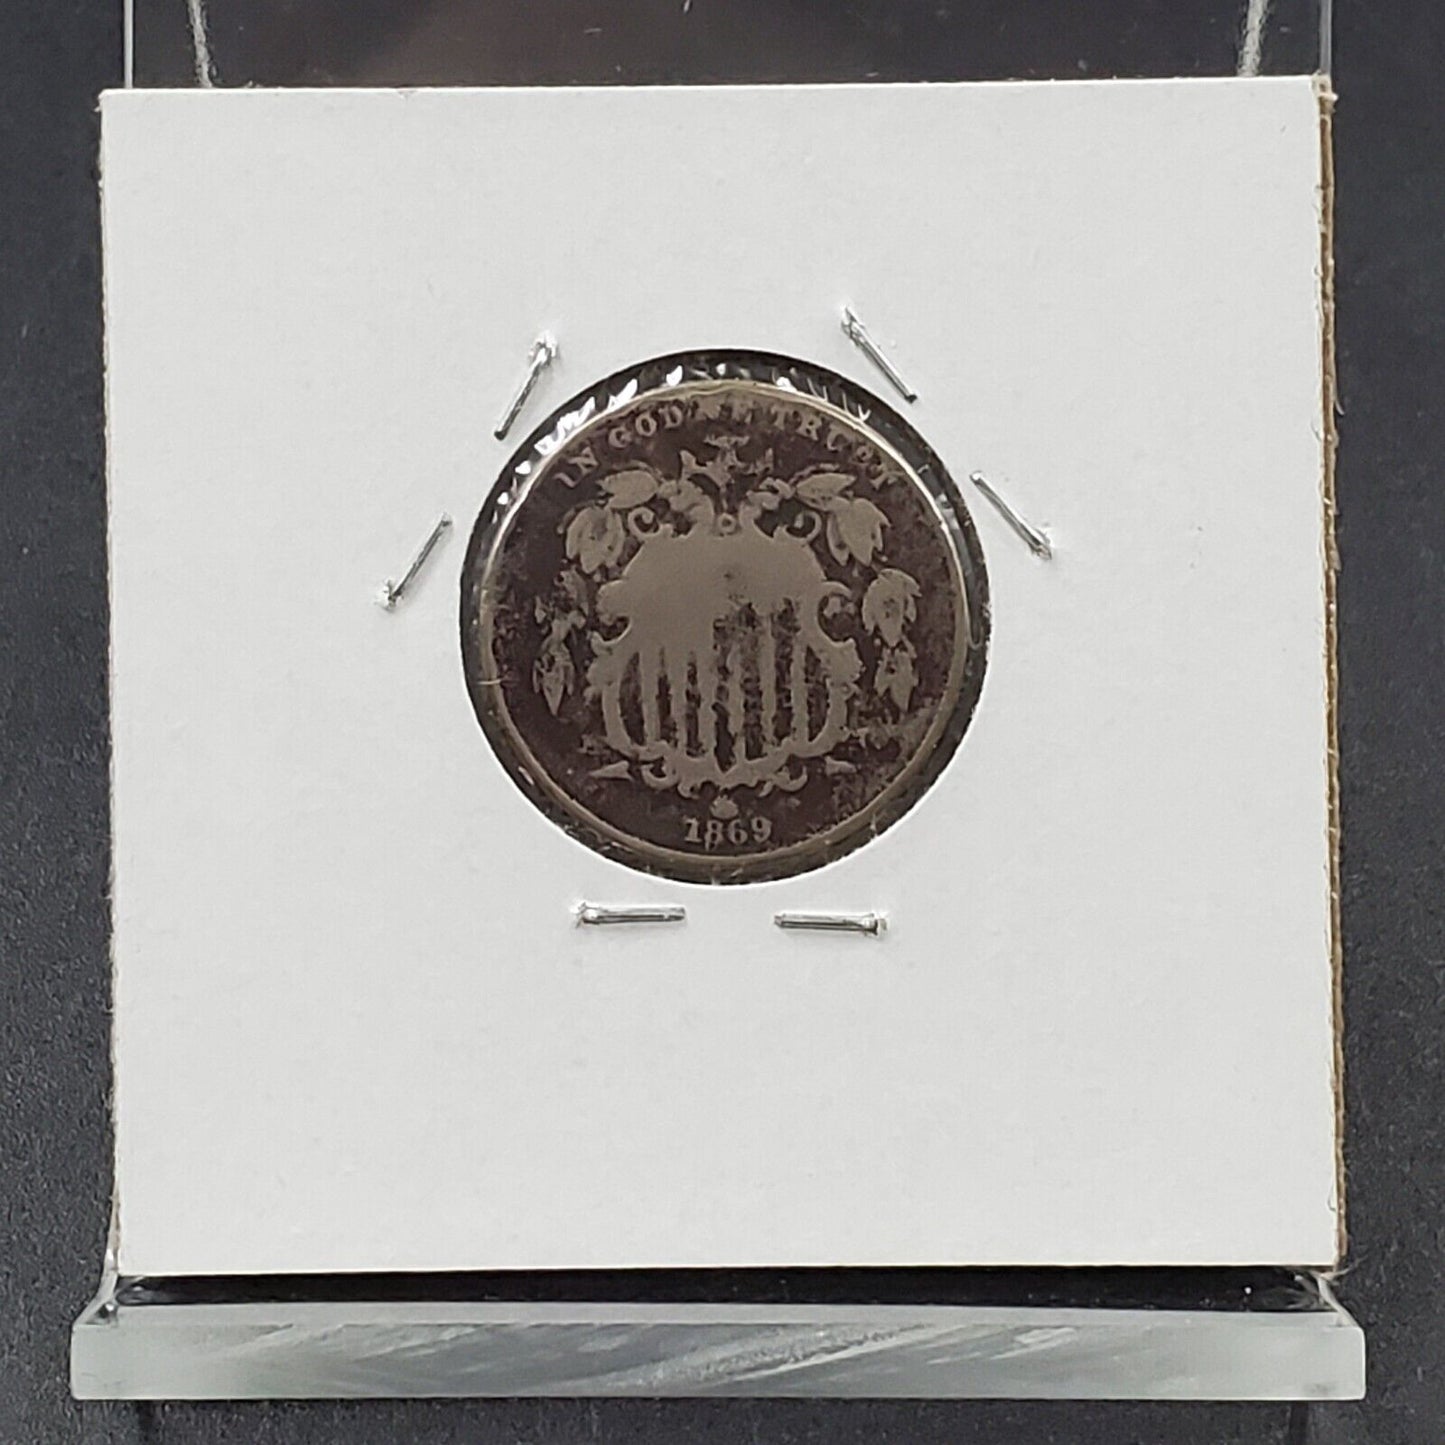 1869 5c Shield Nickel Coin Good details